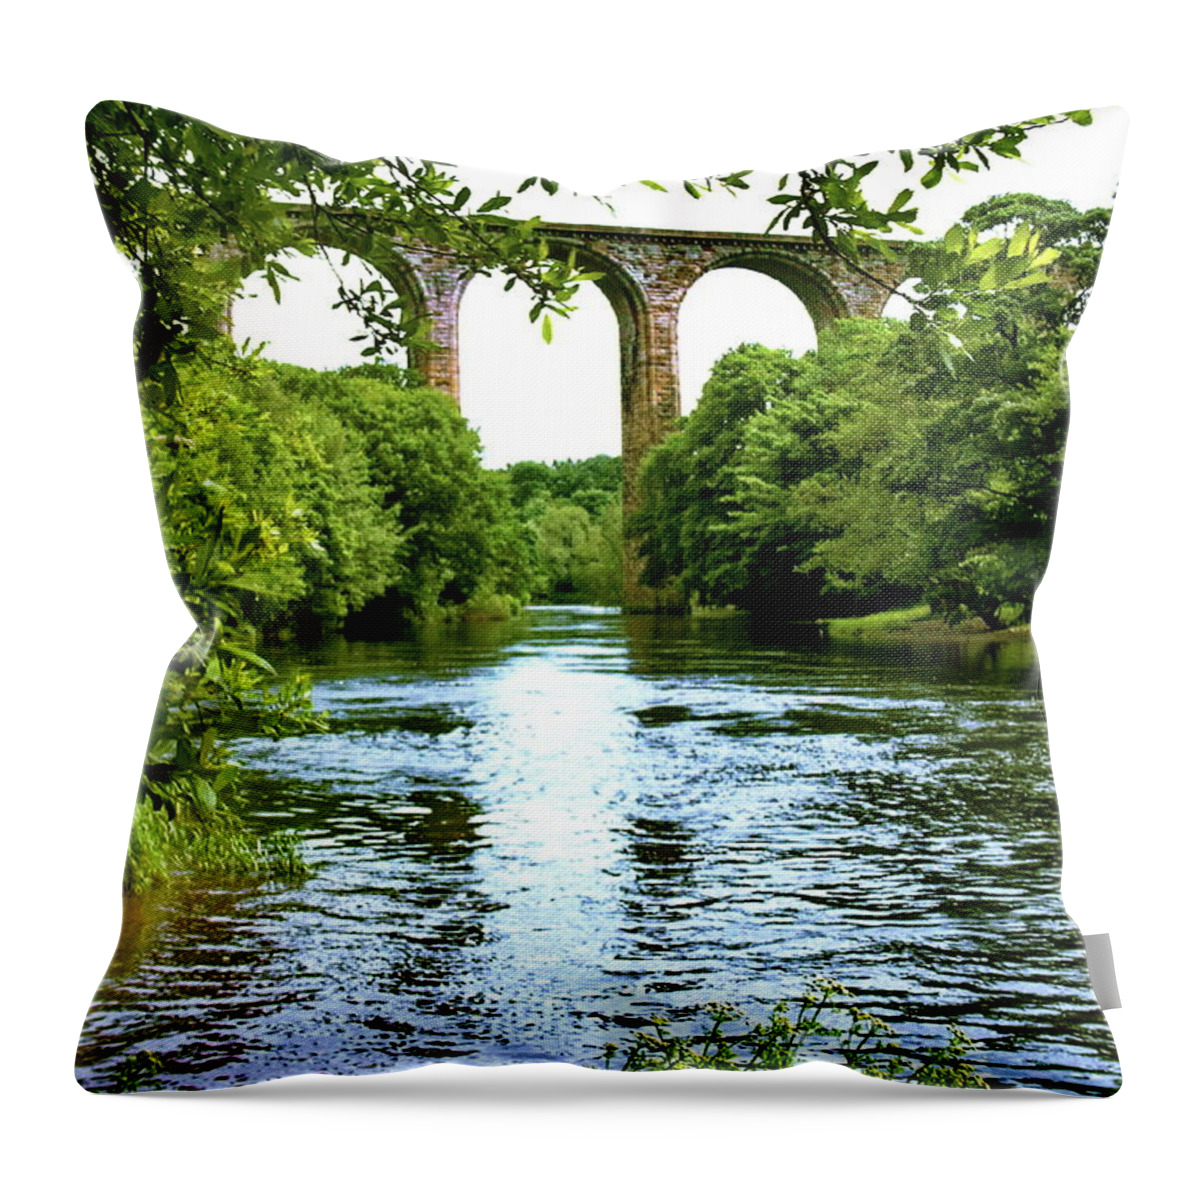 Aquaduct Throw Pillow featuring the photograph Pontcysyllte Aqueduct by Ann Dixon